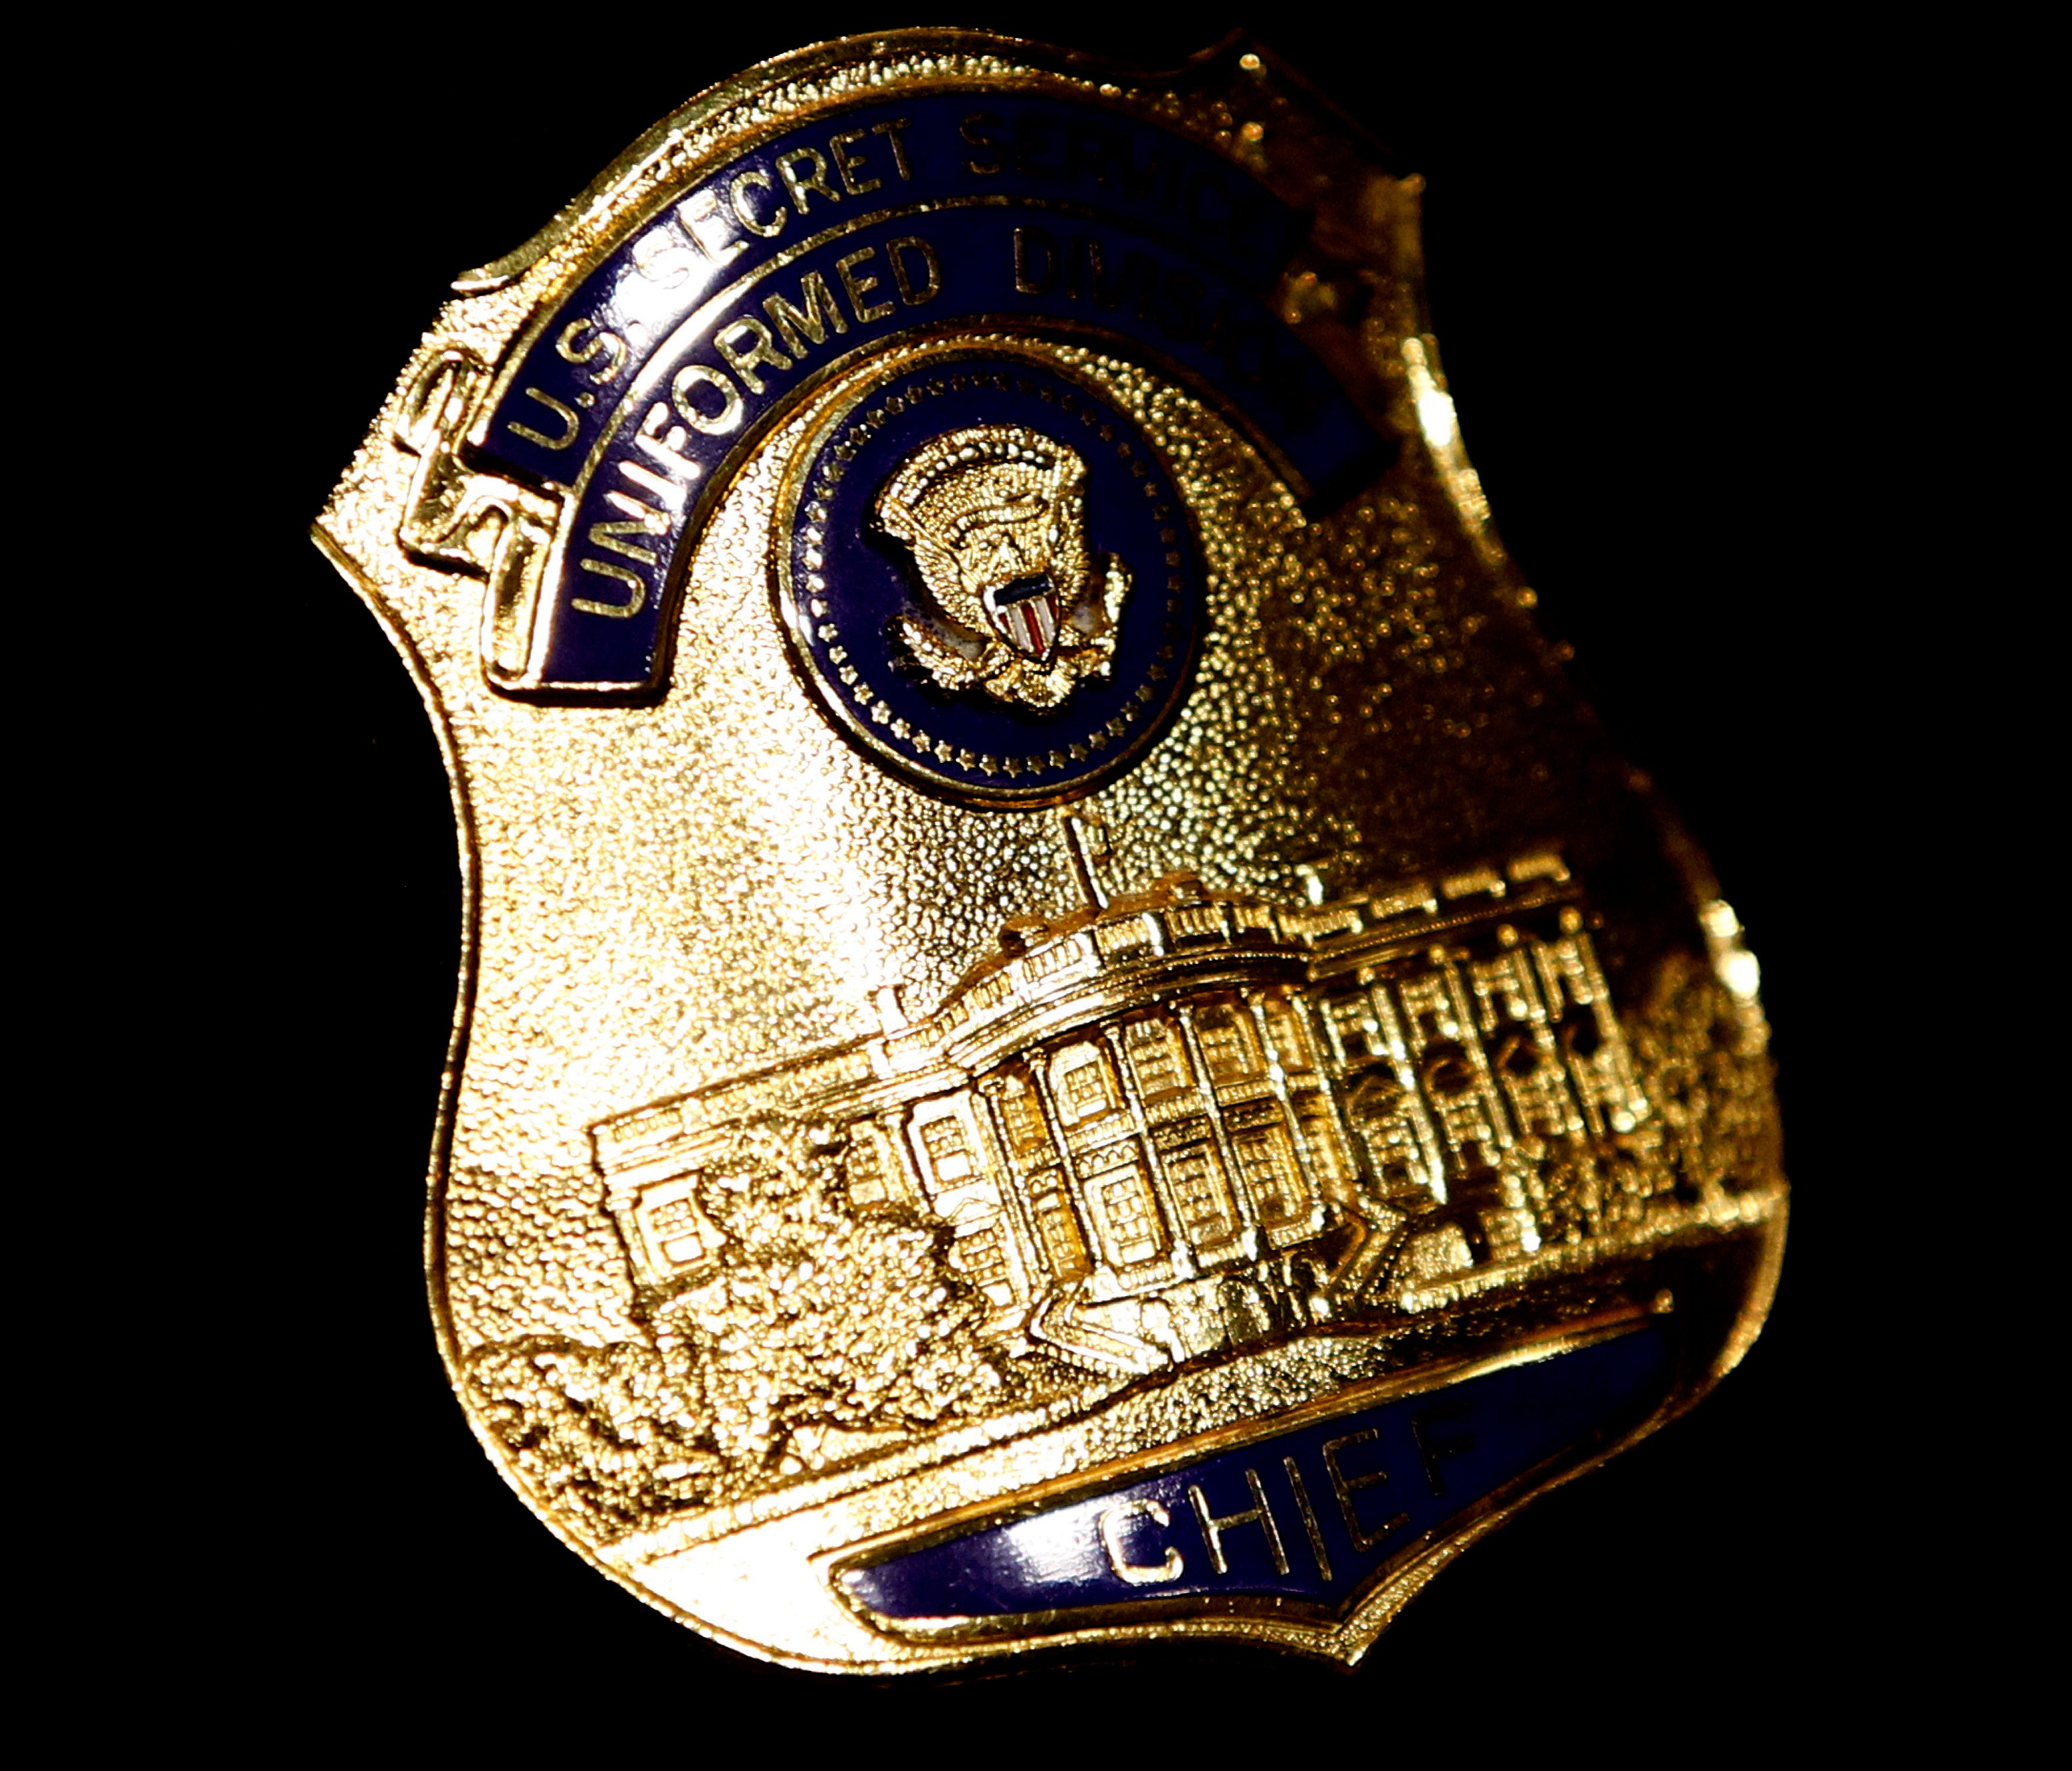 A U.S. Secret Service Uniformed Division shield